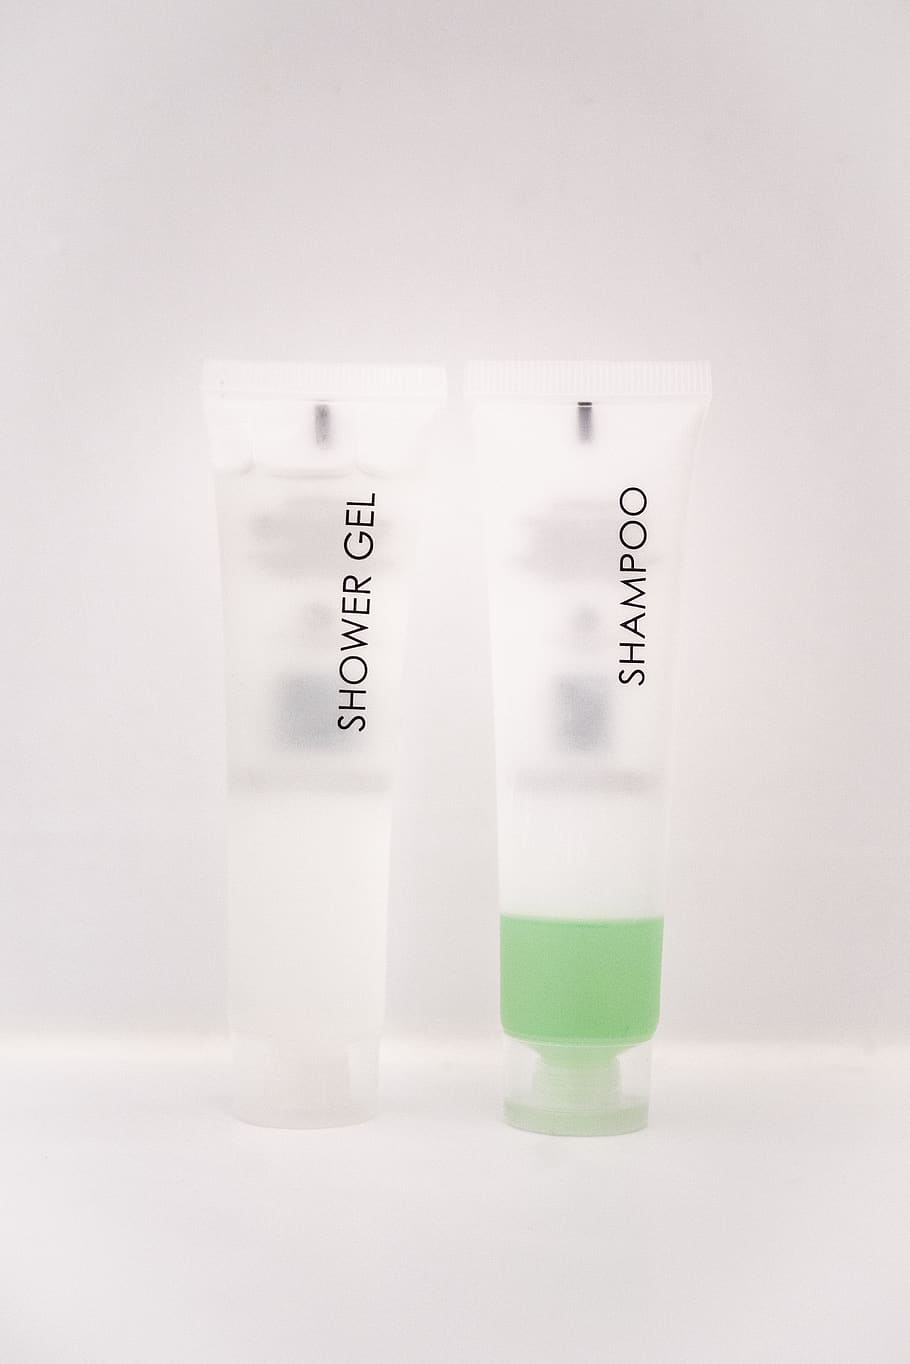 shower gel and shampoo soft-tube bottles on white surface, studio shot